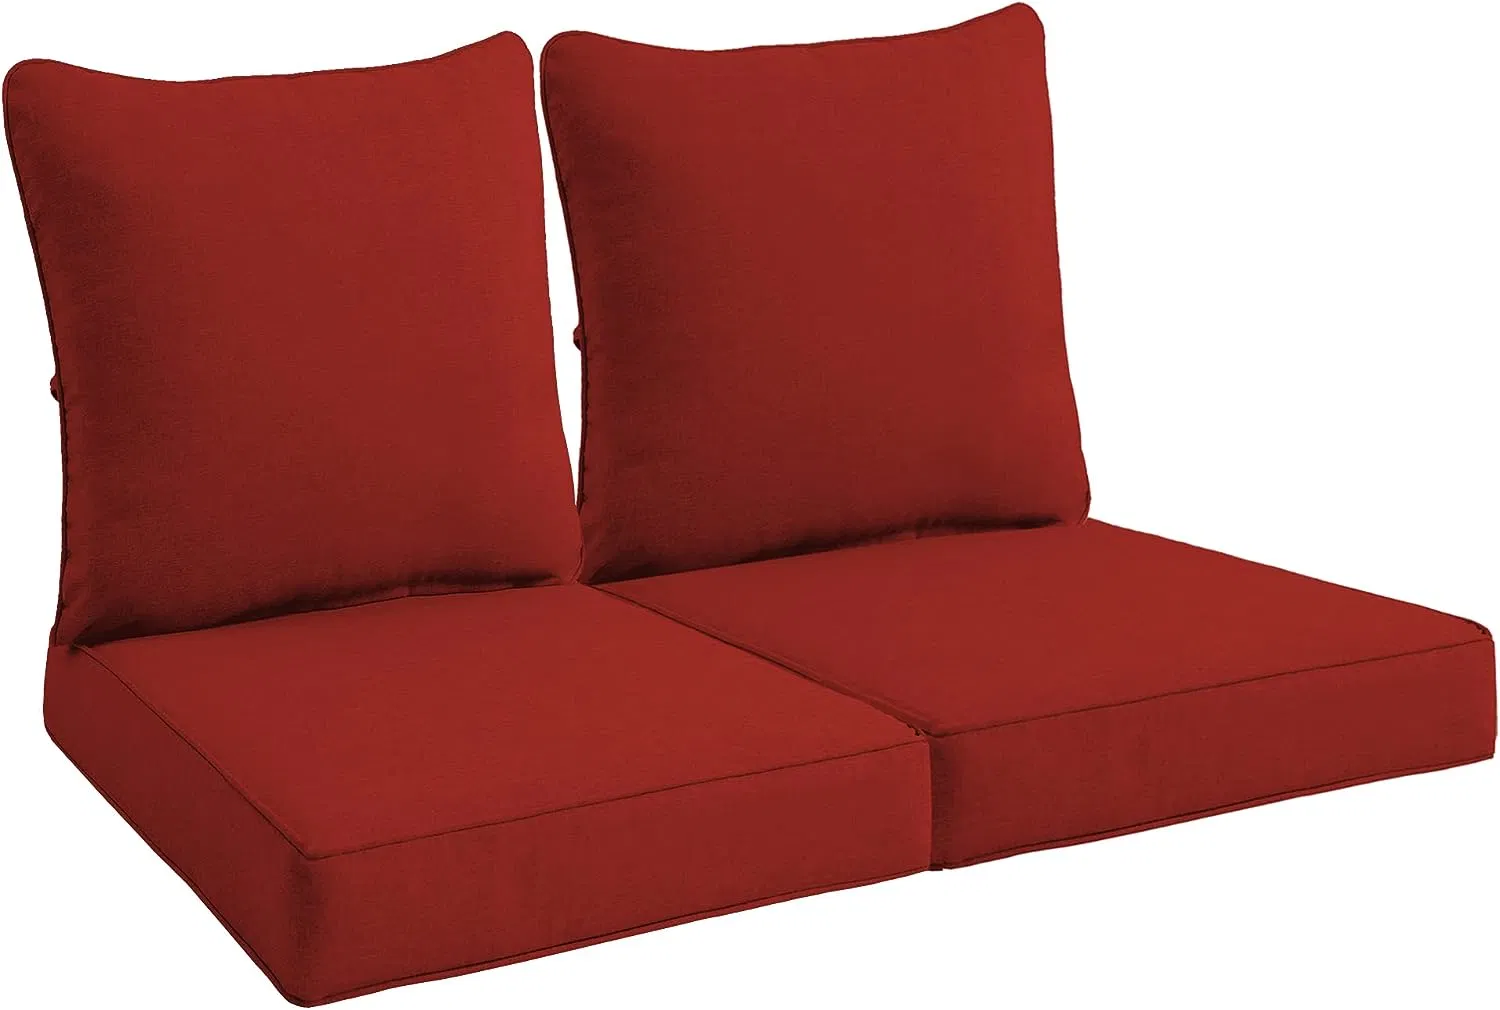 Cojín de respaldo y fondo de asiento profundo resistente a las fade de repelentes de agua Para silla sofá sofá sofá sofá cama exterior cojín de asiento profundo